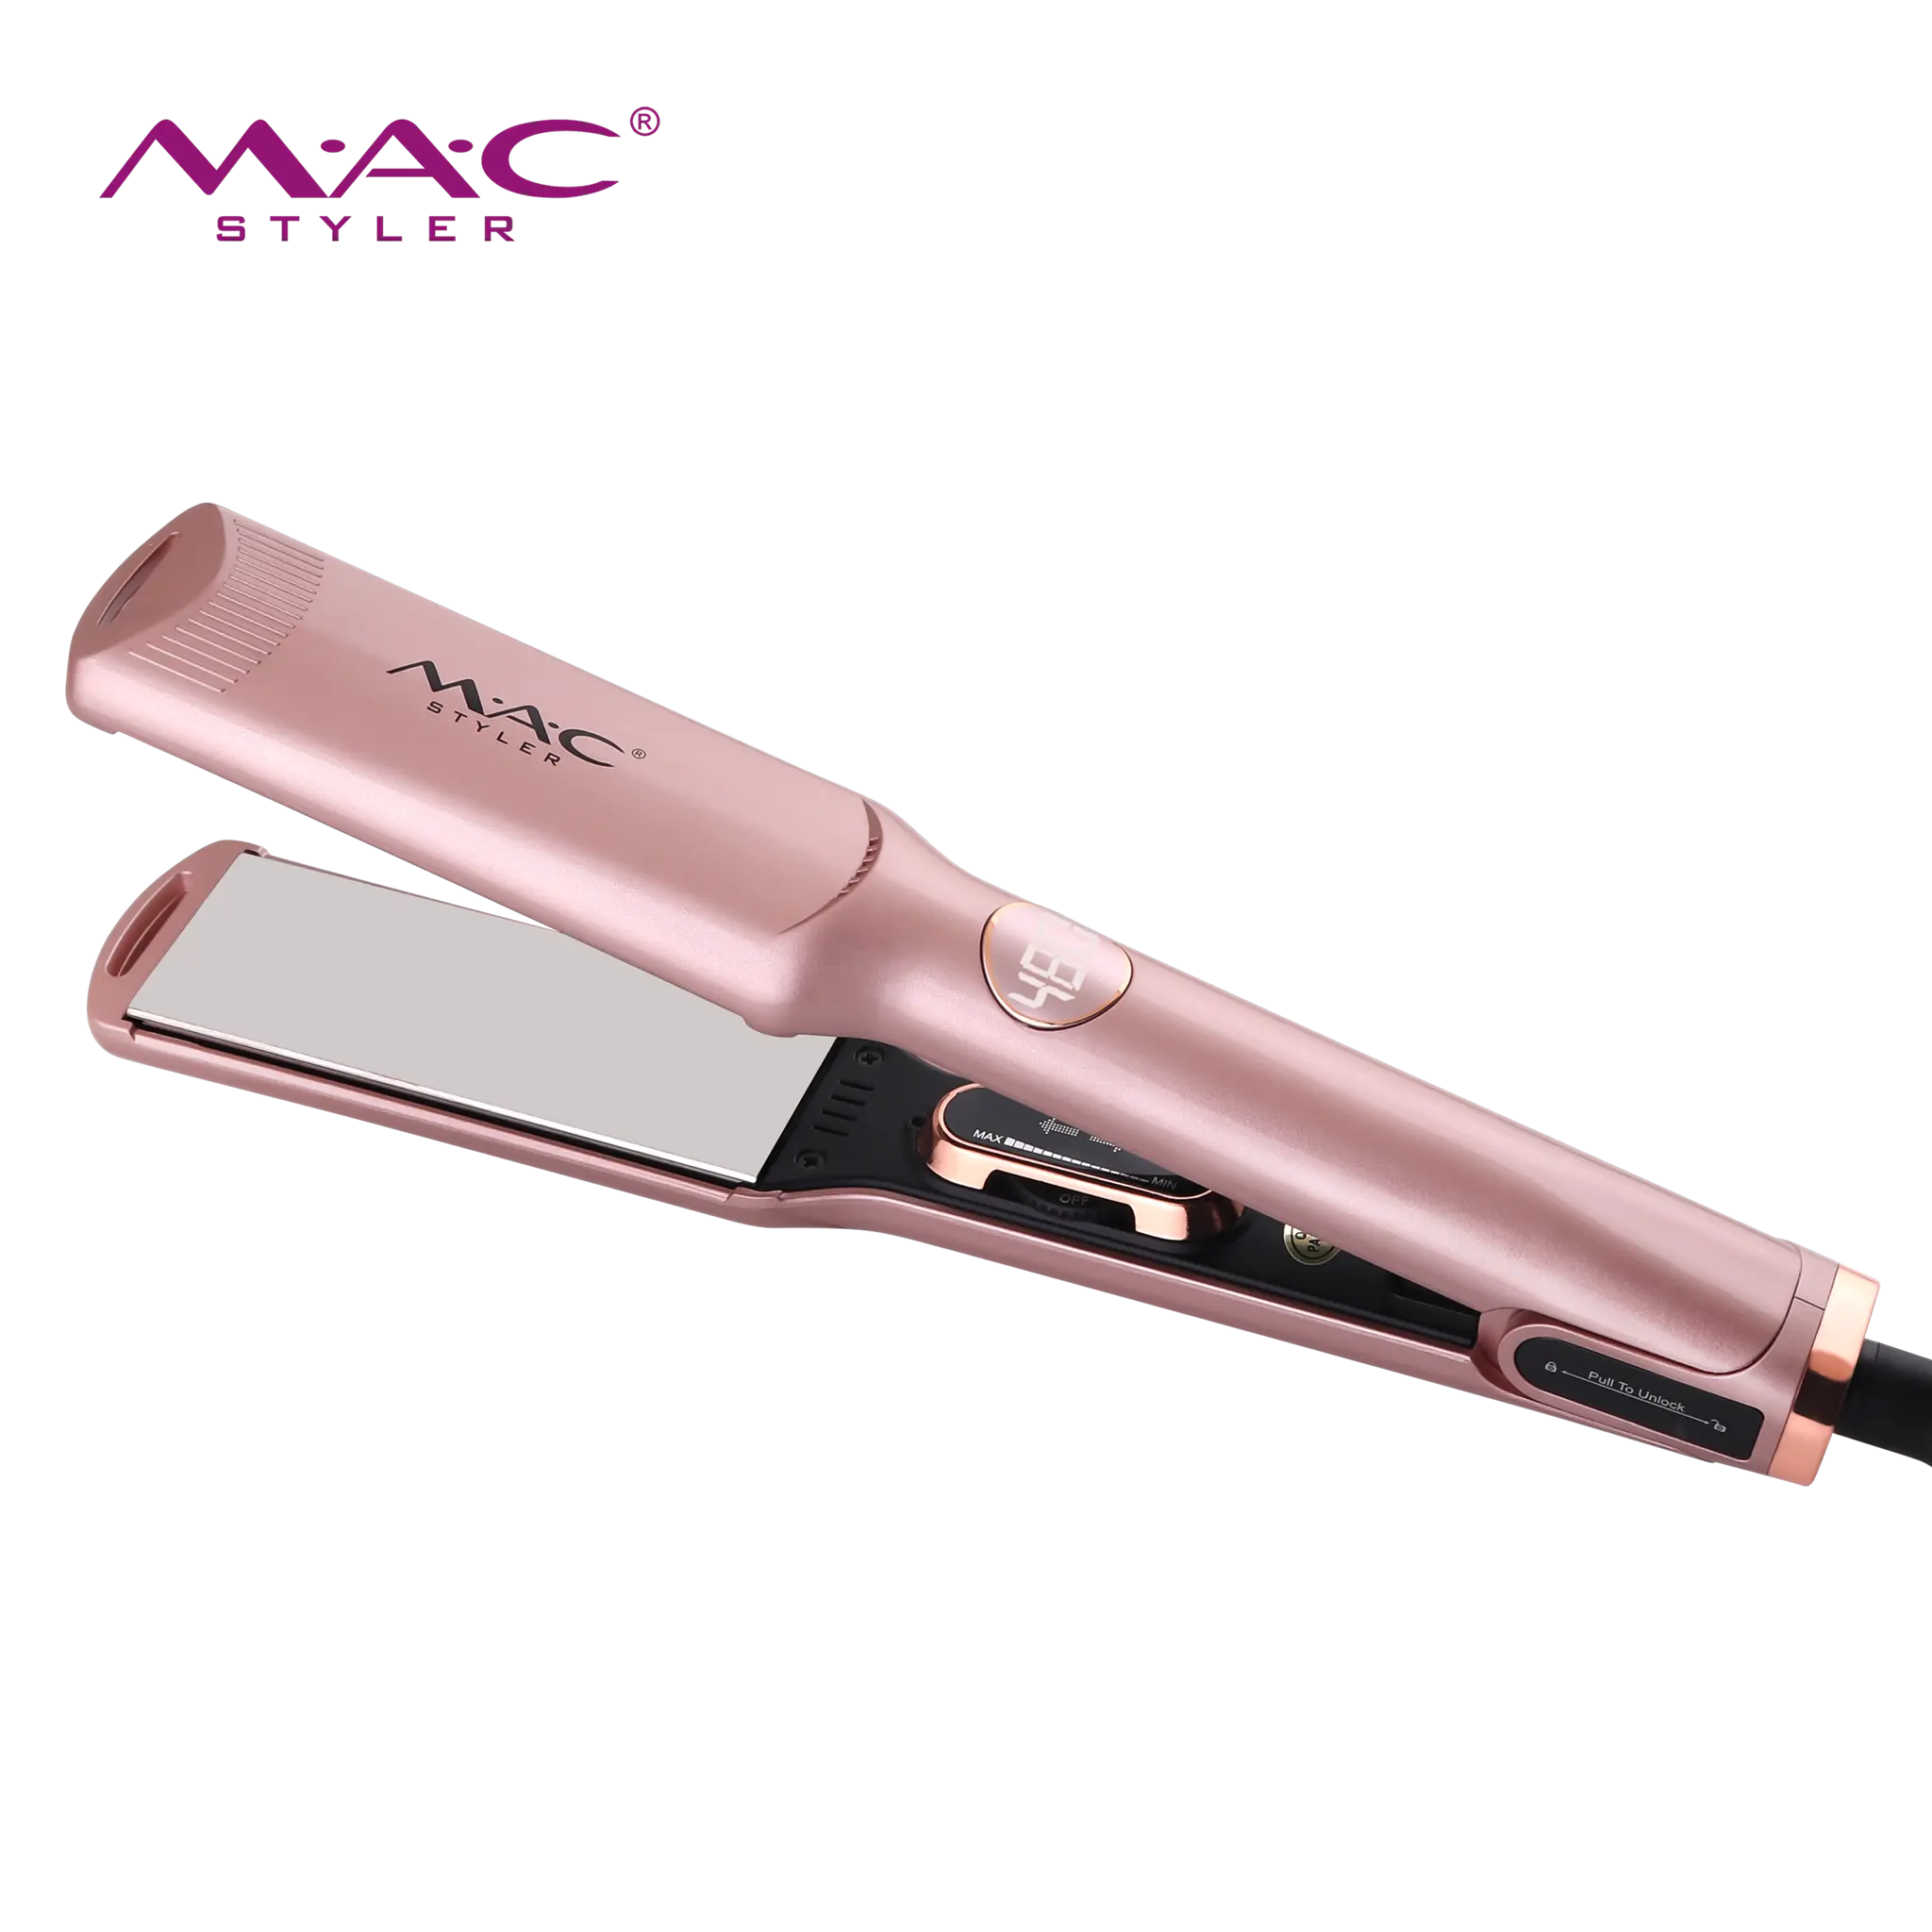 MAC Professional Salon Hair Straightener Argan Oil Tourmaline Ceramic Titanium Straightening Flat Iron for Healthy Styling